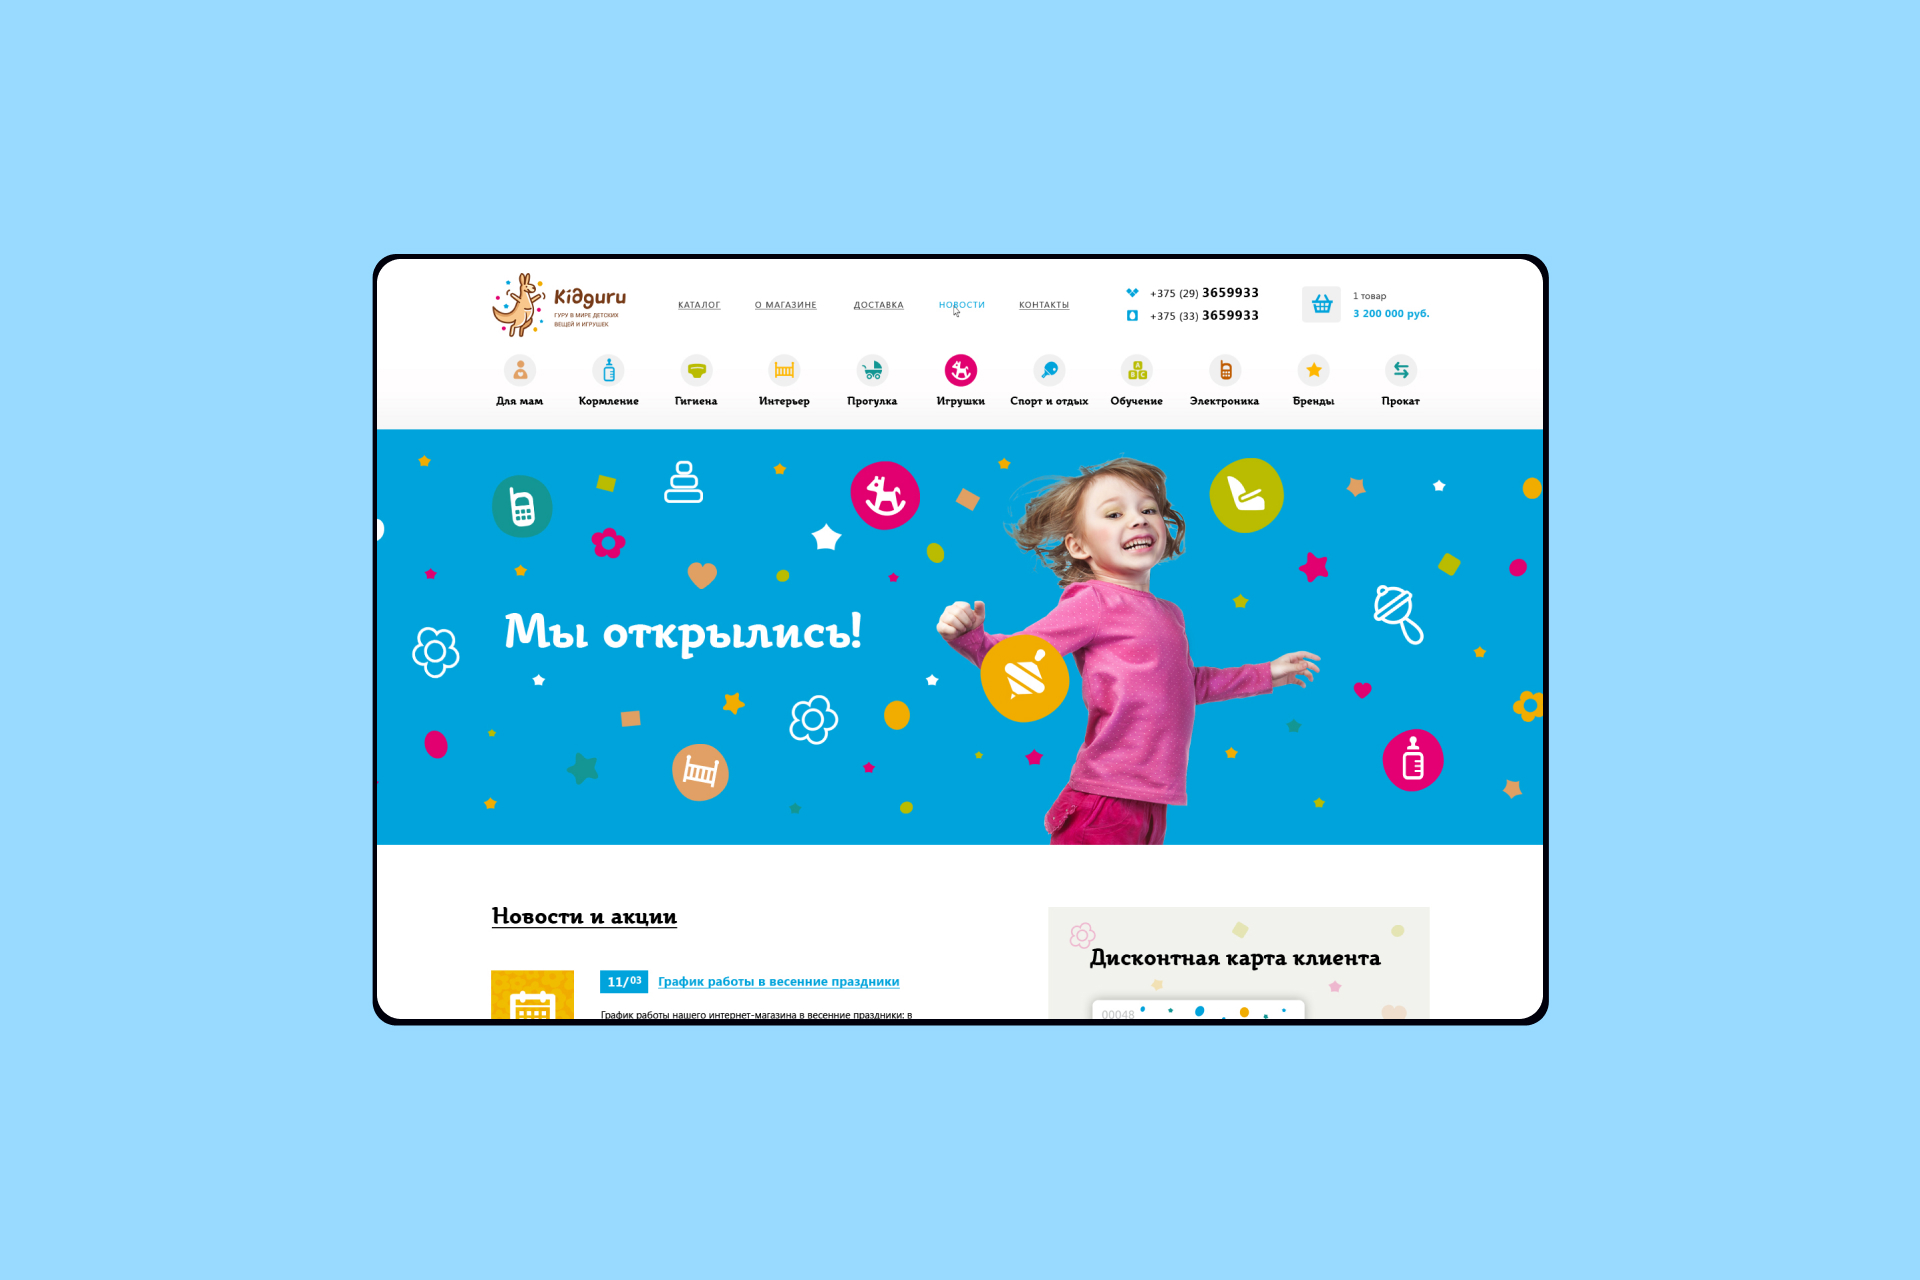 Design of an online store of children's goods